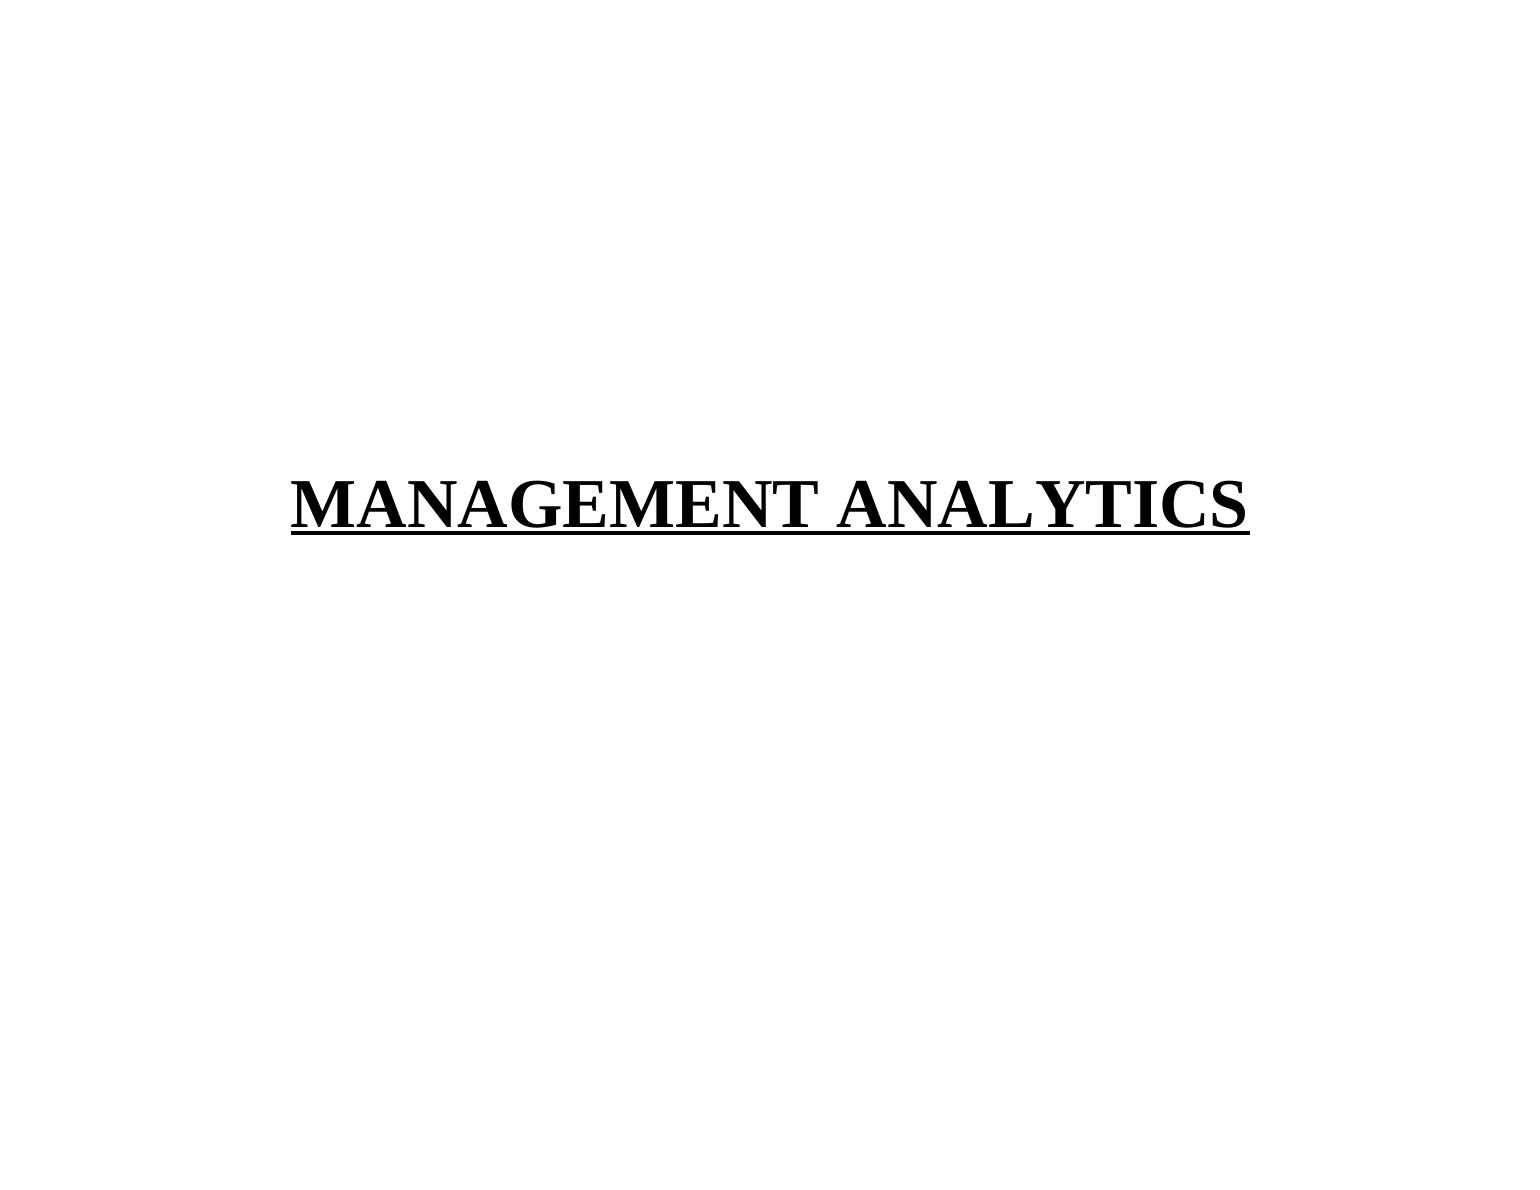 Management Analytics: Descriptive and Regression Analysis_1